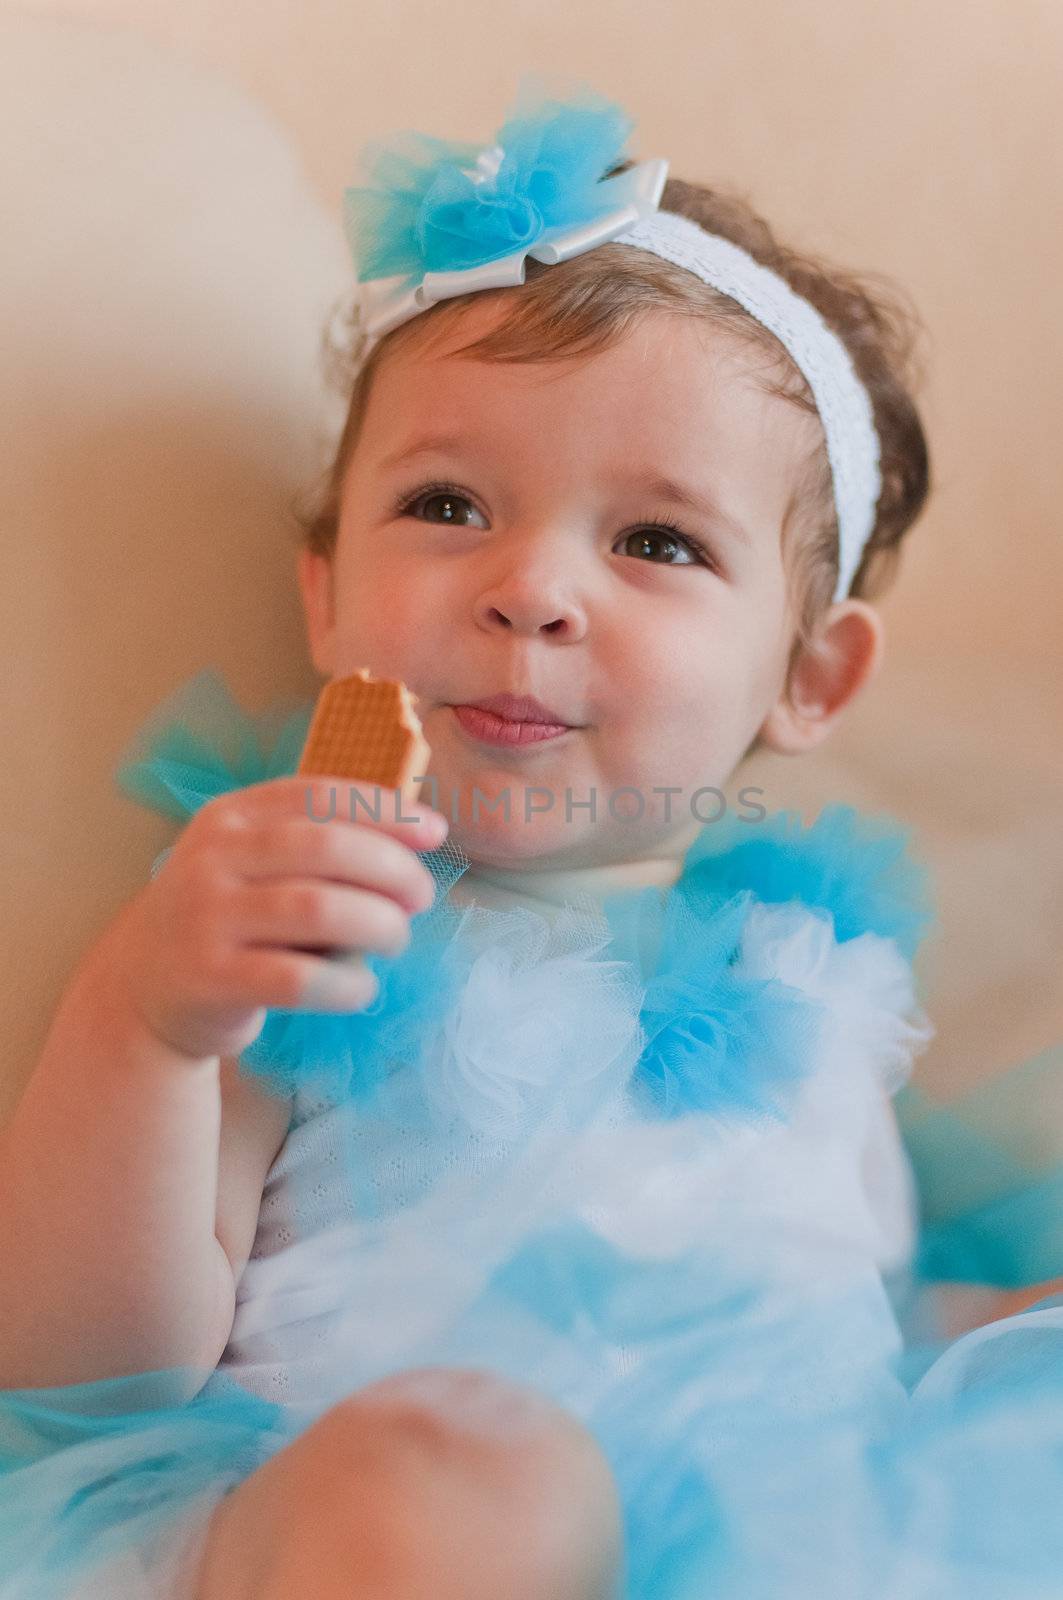 Little girl in the blue dress eats cookie